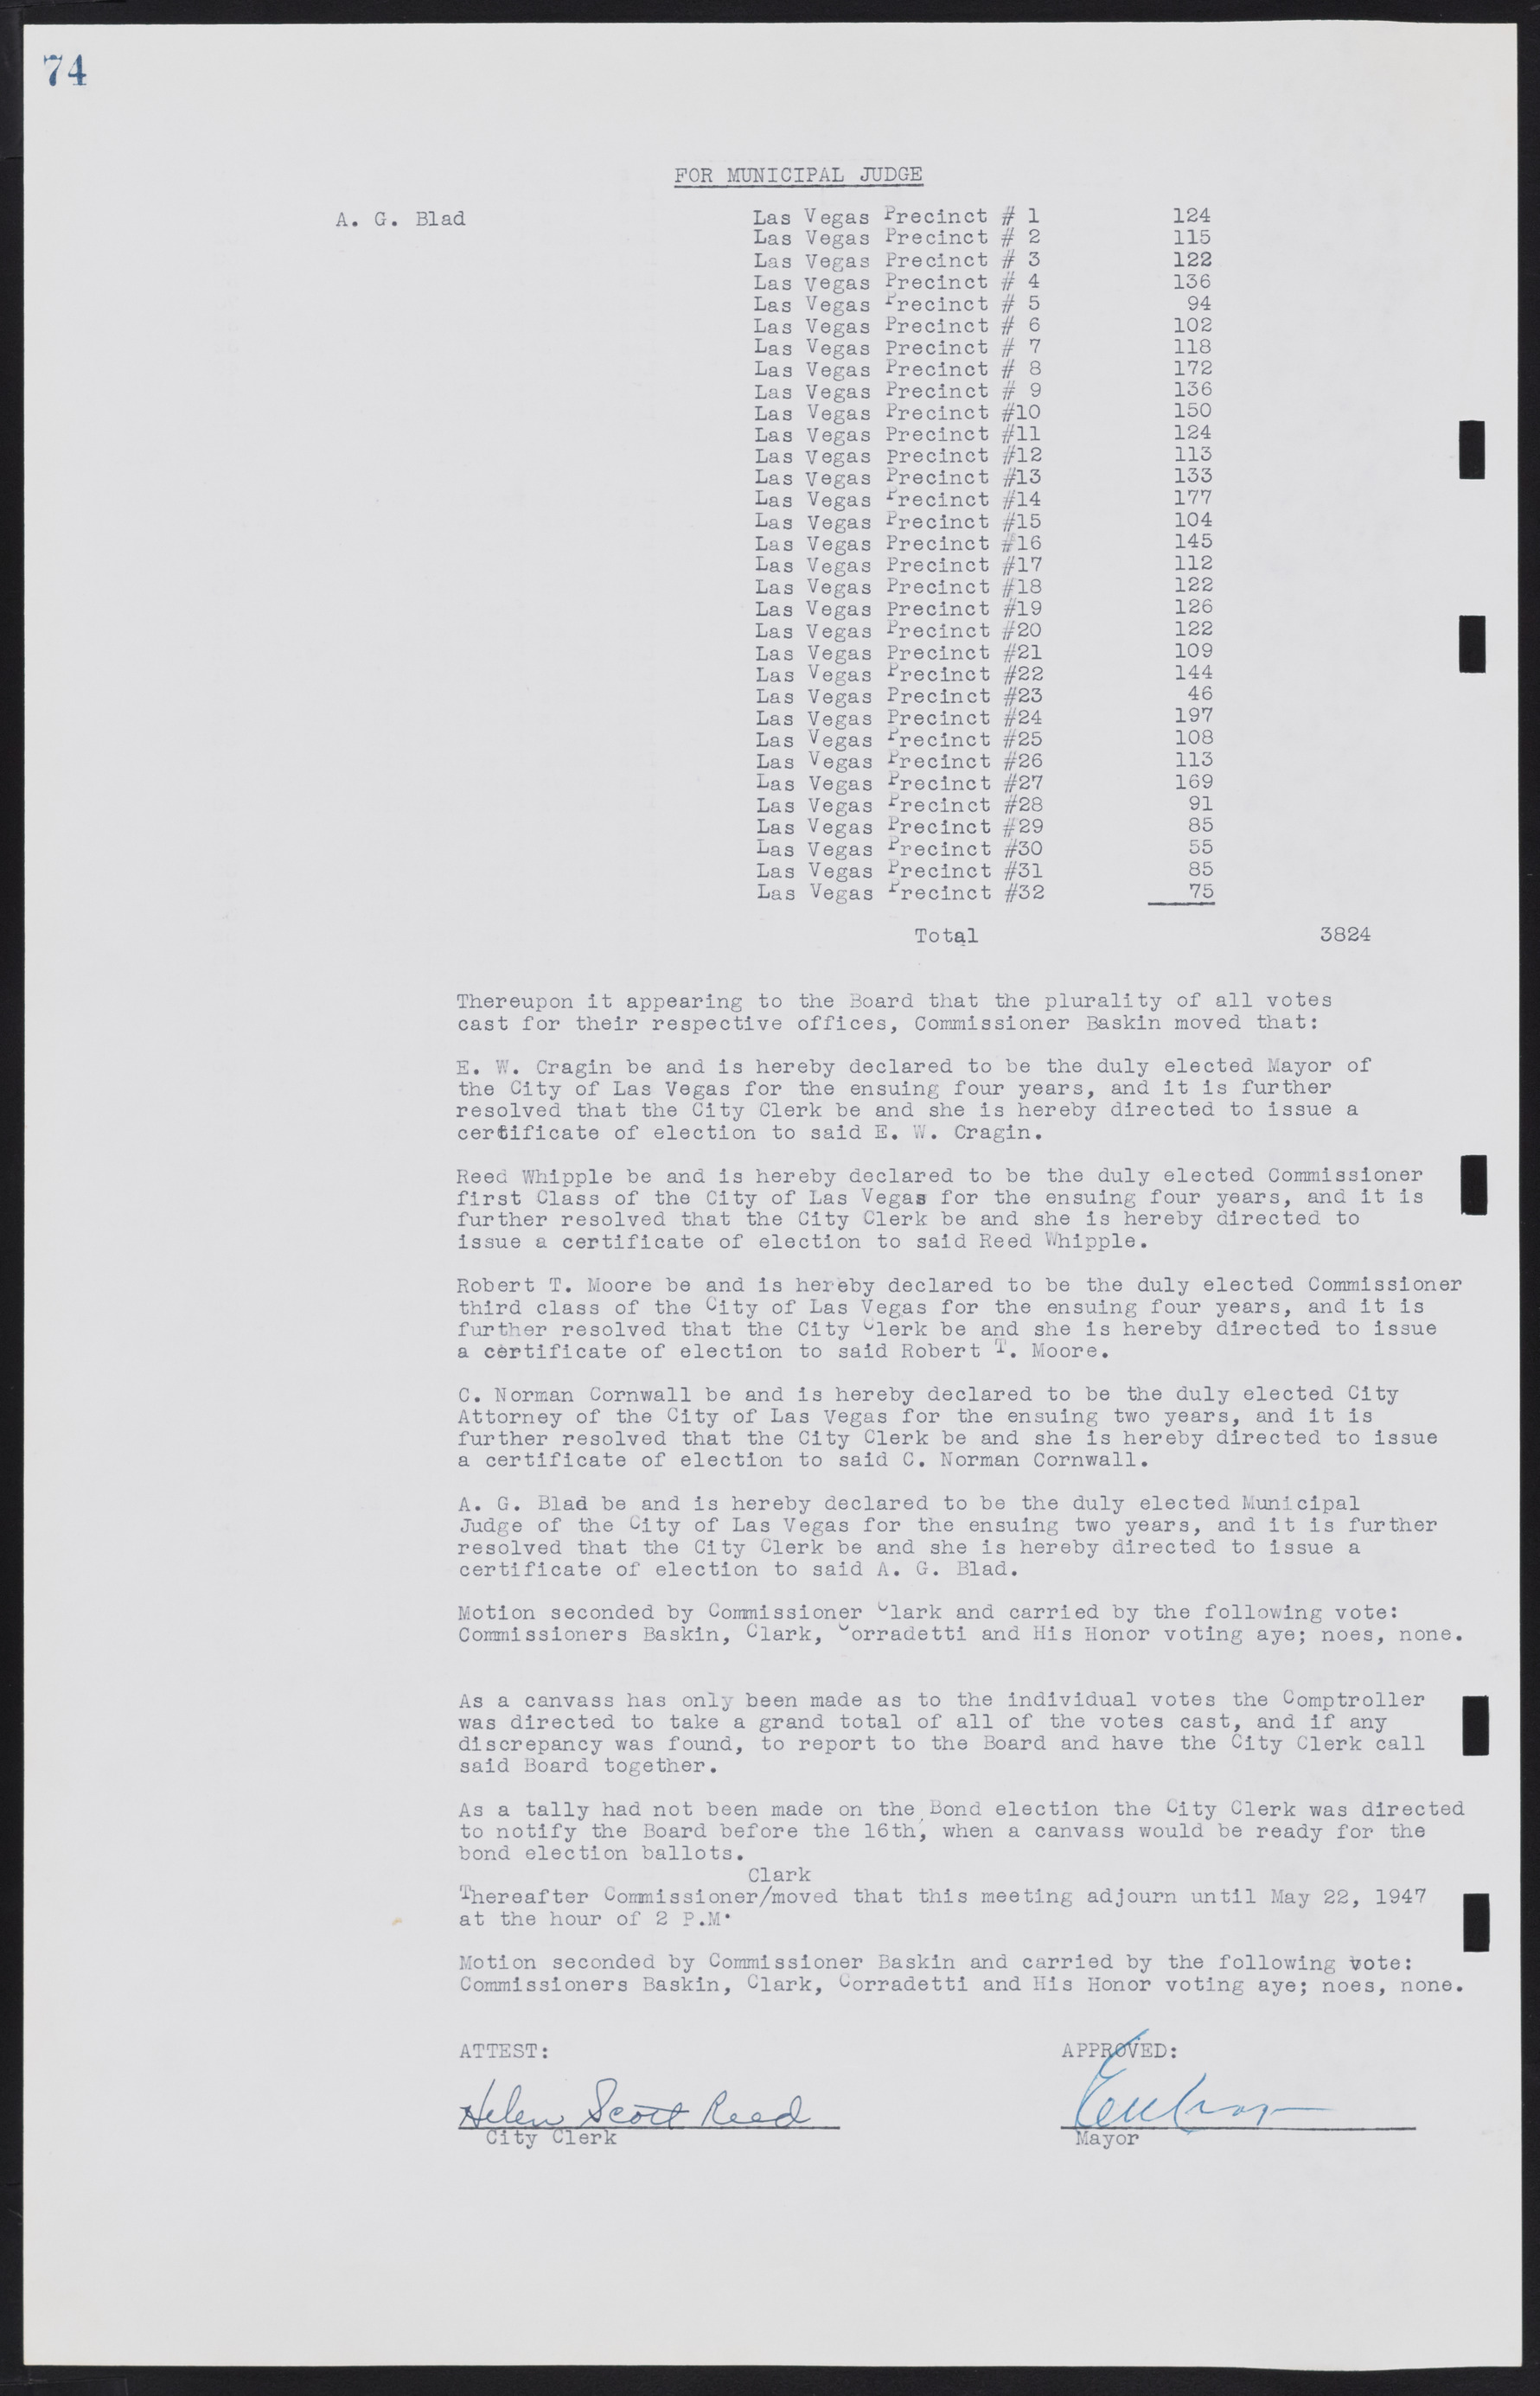 Las Vegas City Commission Minutes, January 7, 1947 to October 26, 1949, lvc000006-89